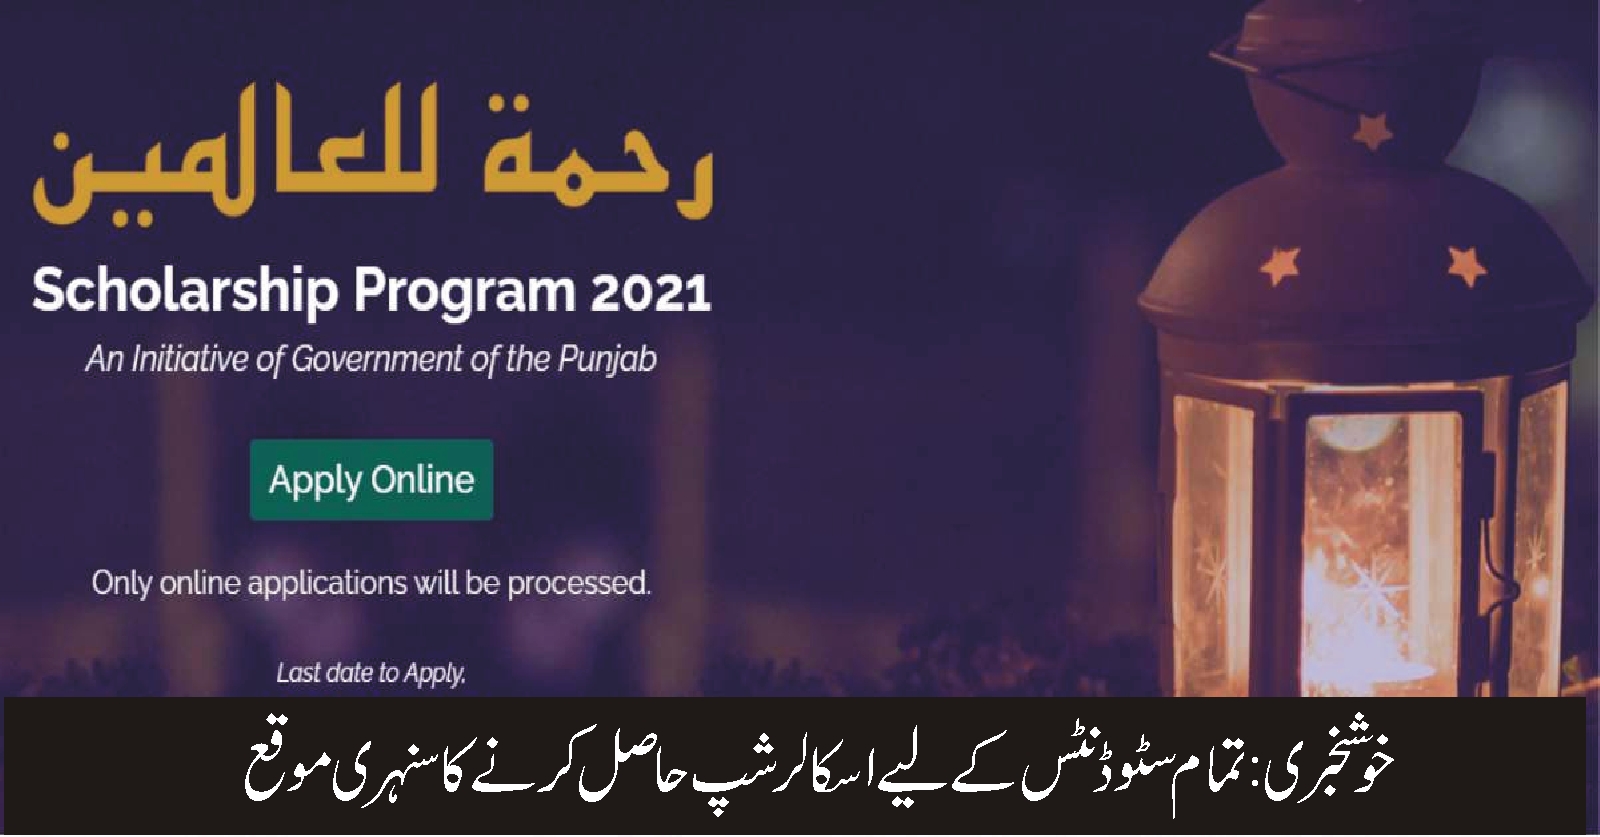 حکومت کا رحمت اللعالمین اسکالرشپ پروگرام 2021 میں غیر مسلم طلبا بھی شامل